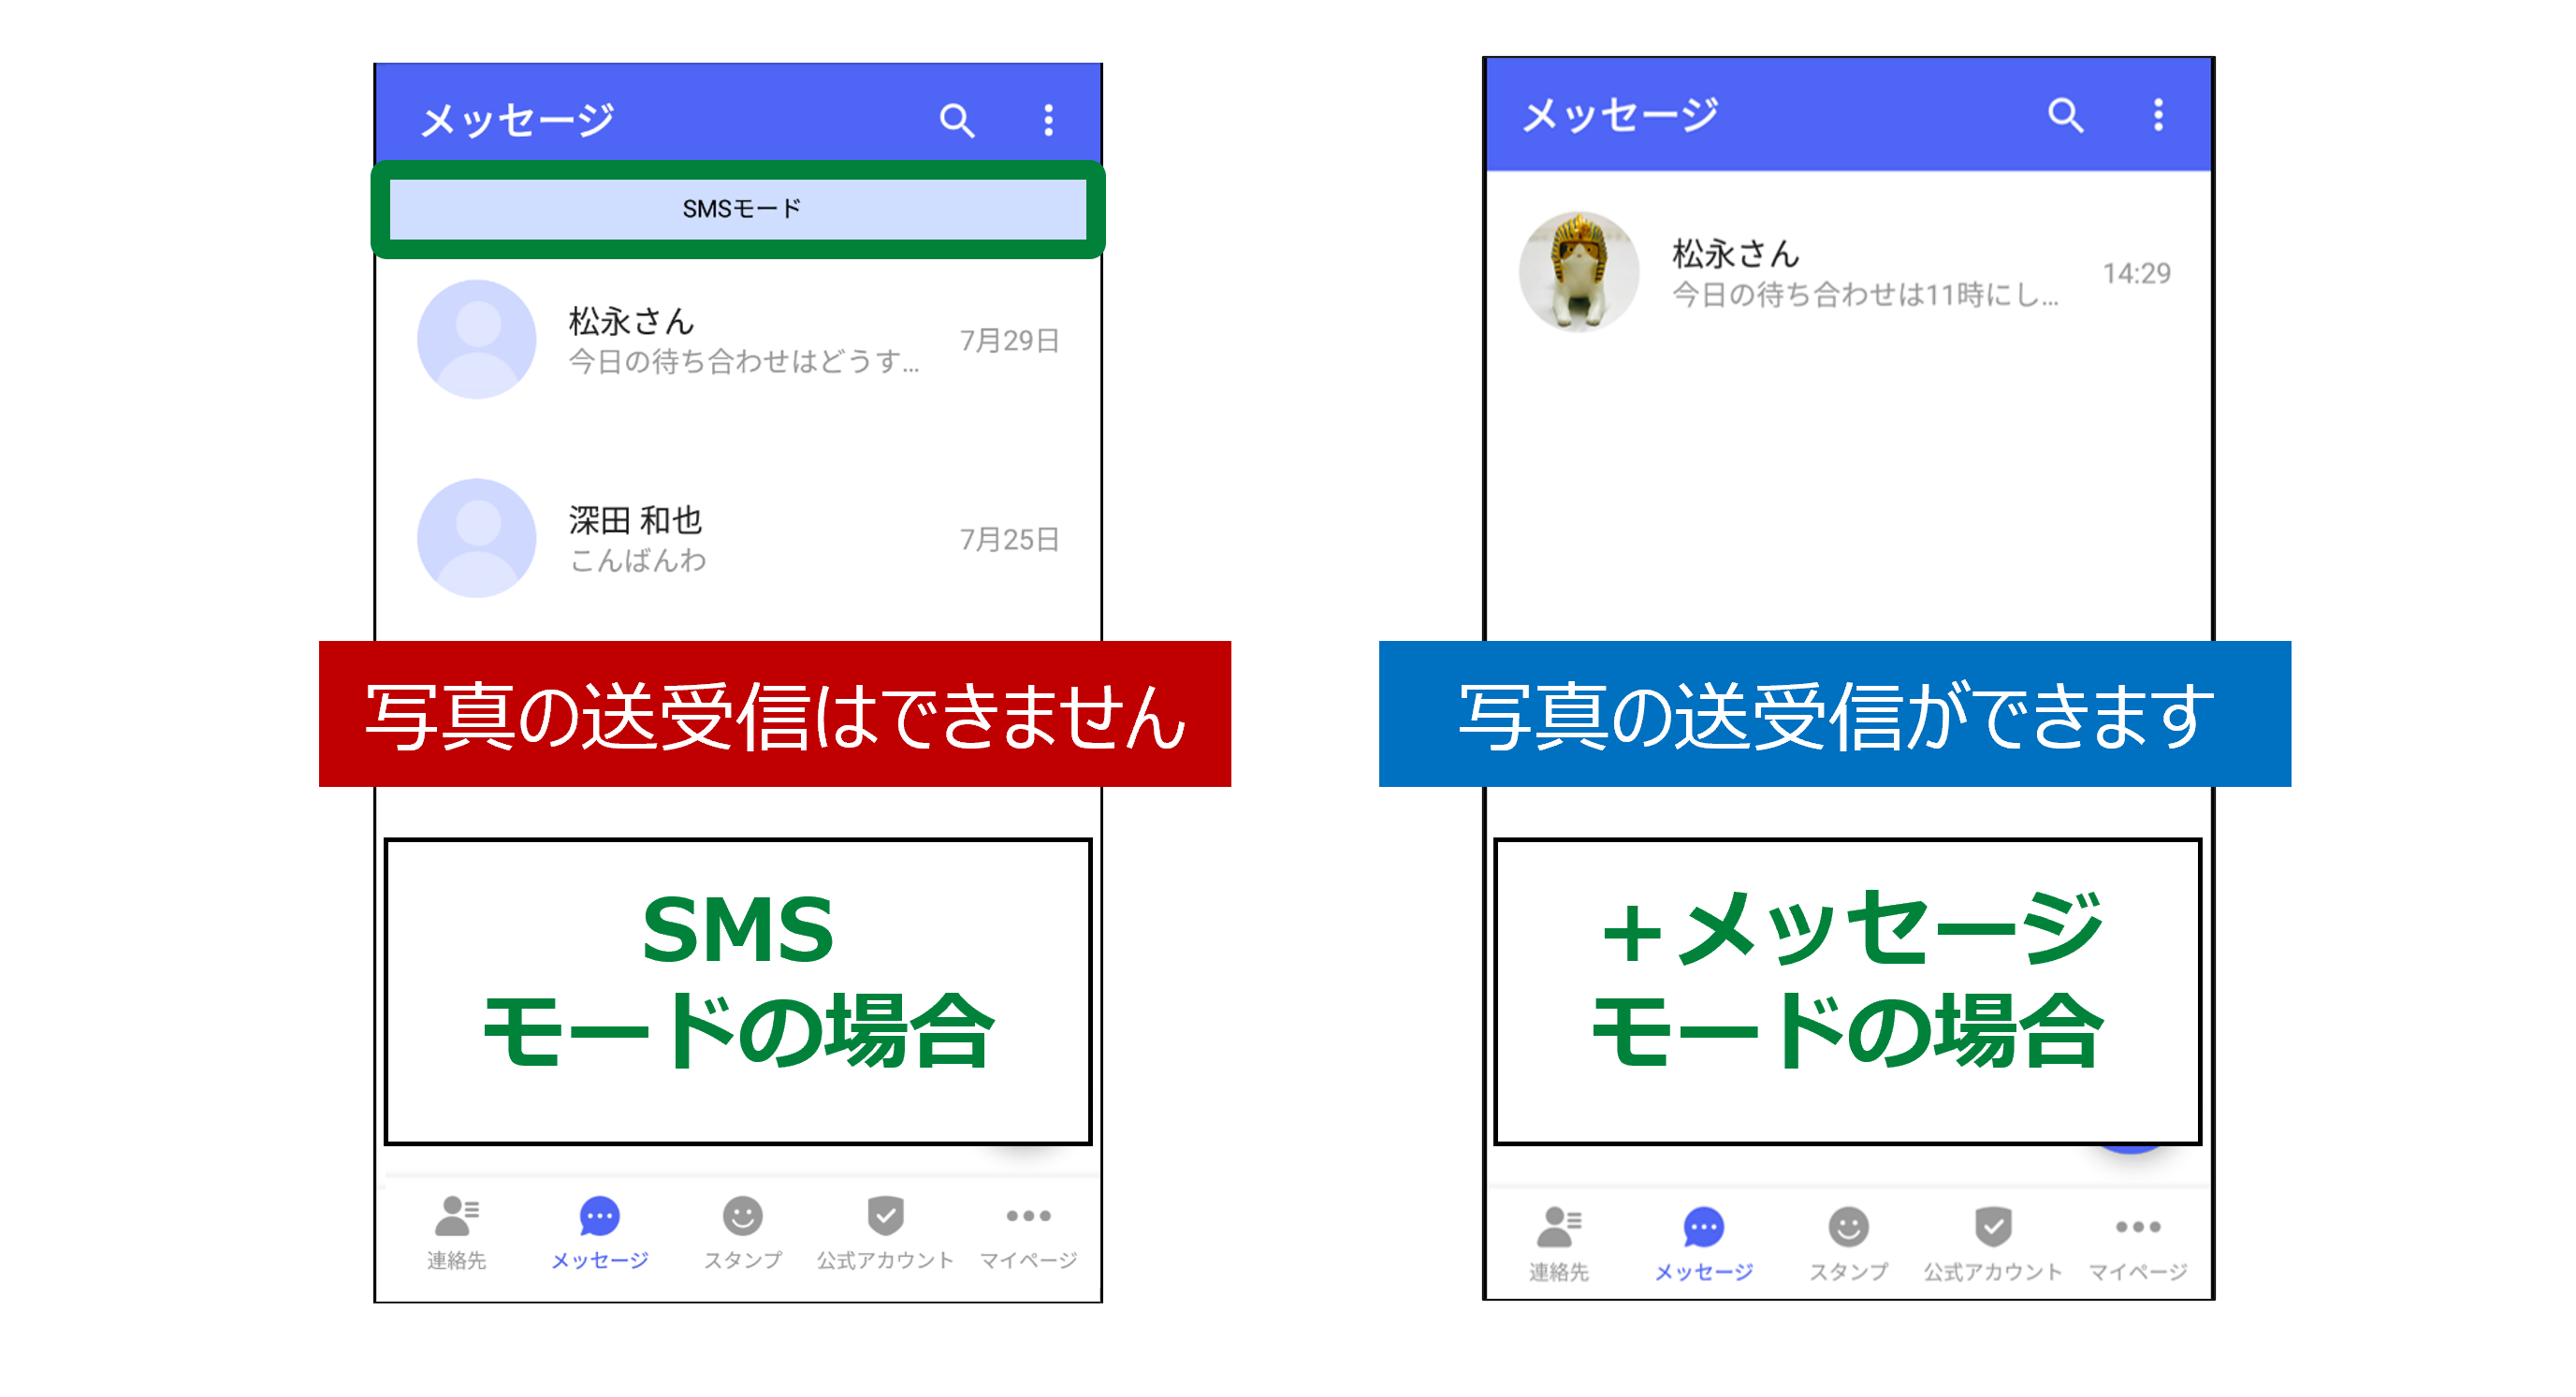 SMSモードとプラメモードの比較